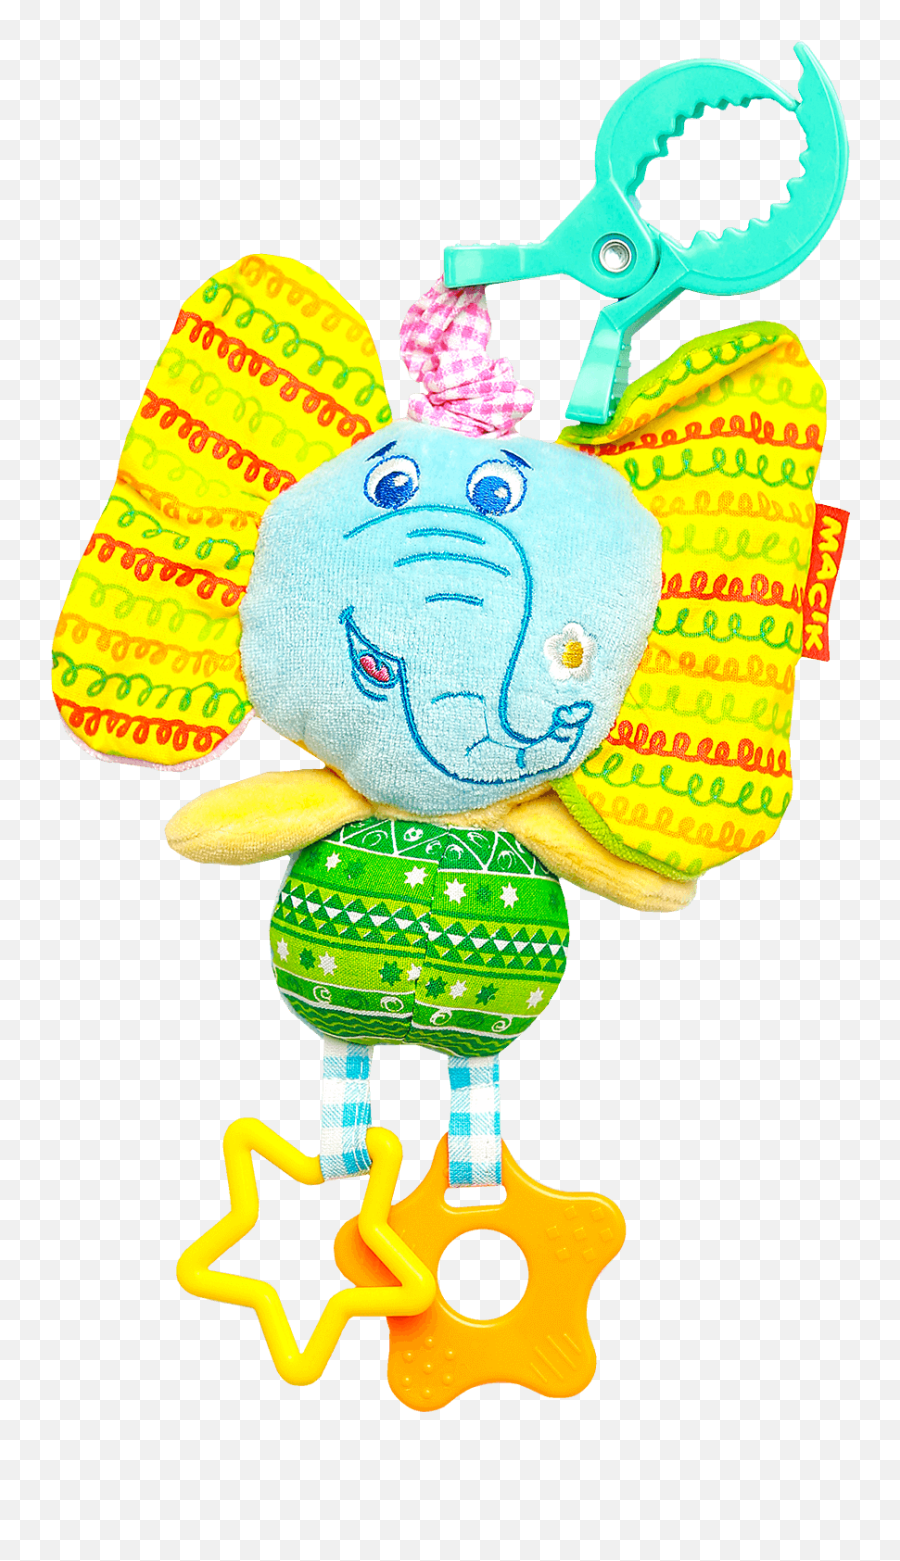 Activity Toy With Vibration Elephant Utie U2013 Macik - Toy Emoji,Elephants + Emotions + Happiness